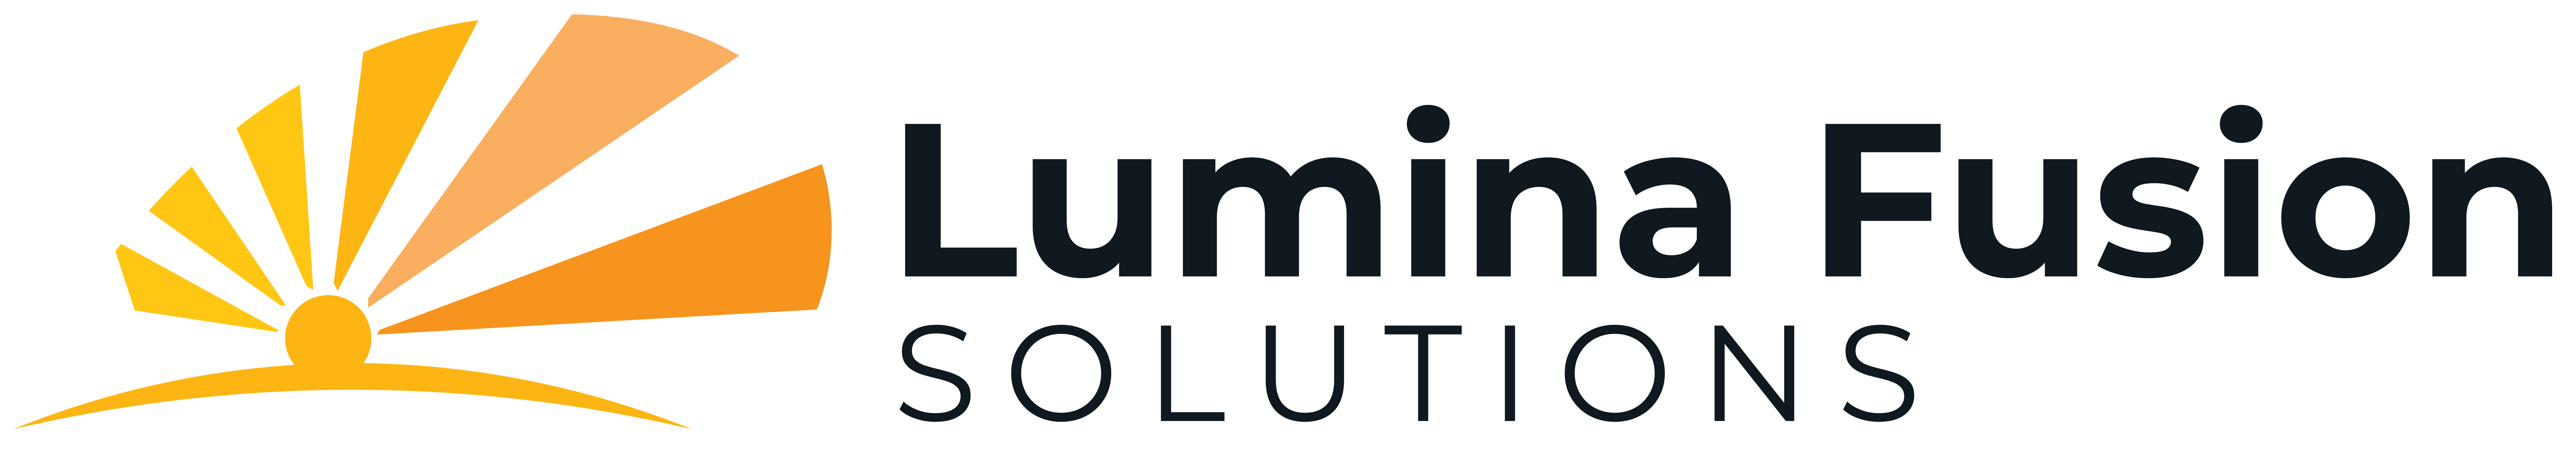 Lumina Fusion Solutions